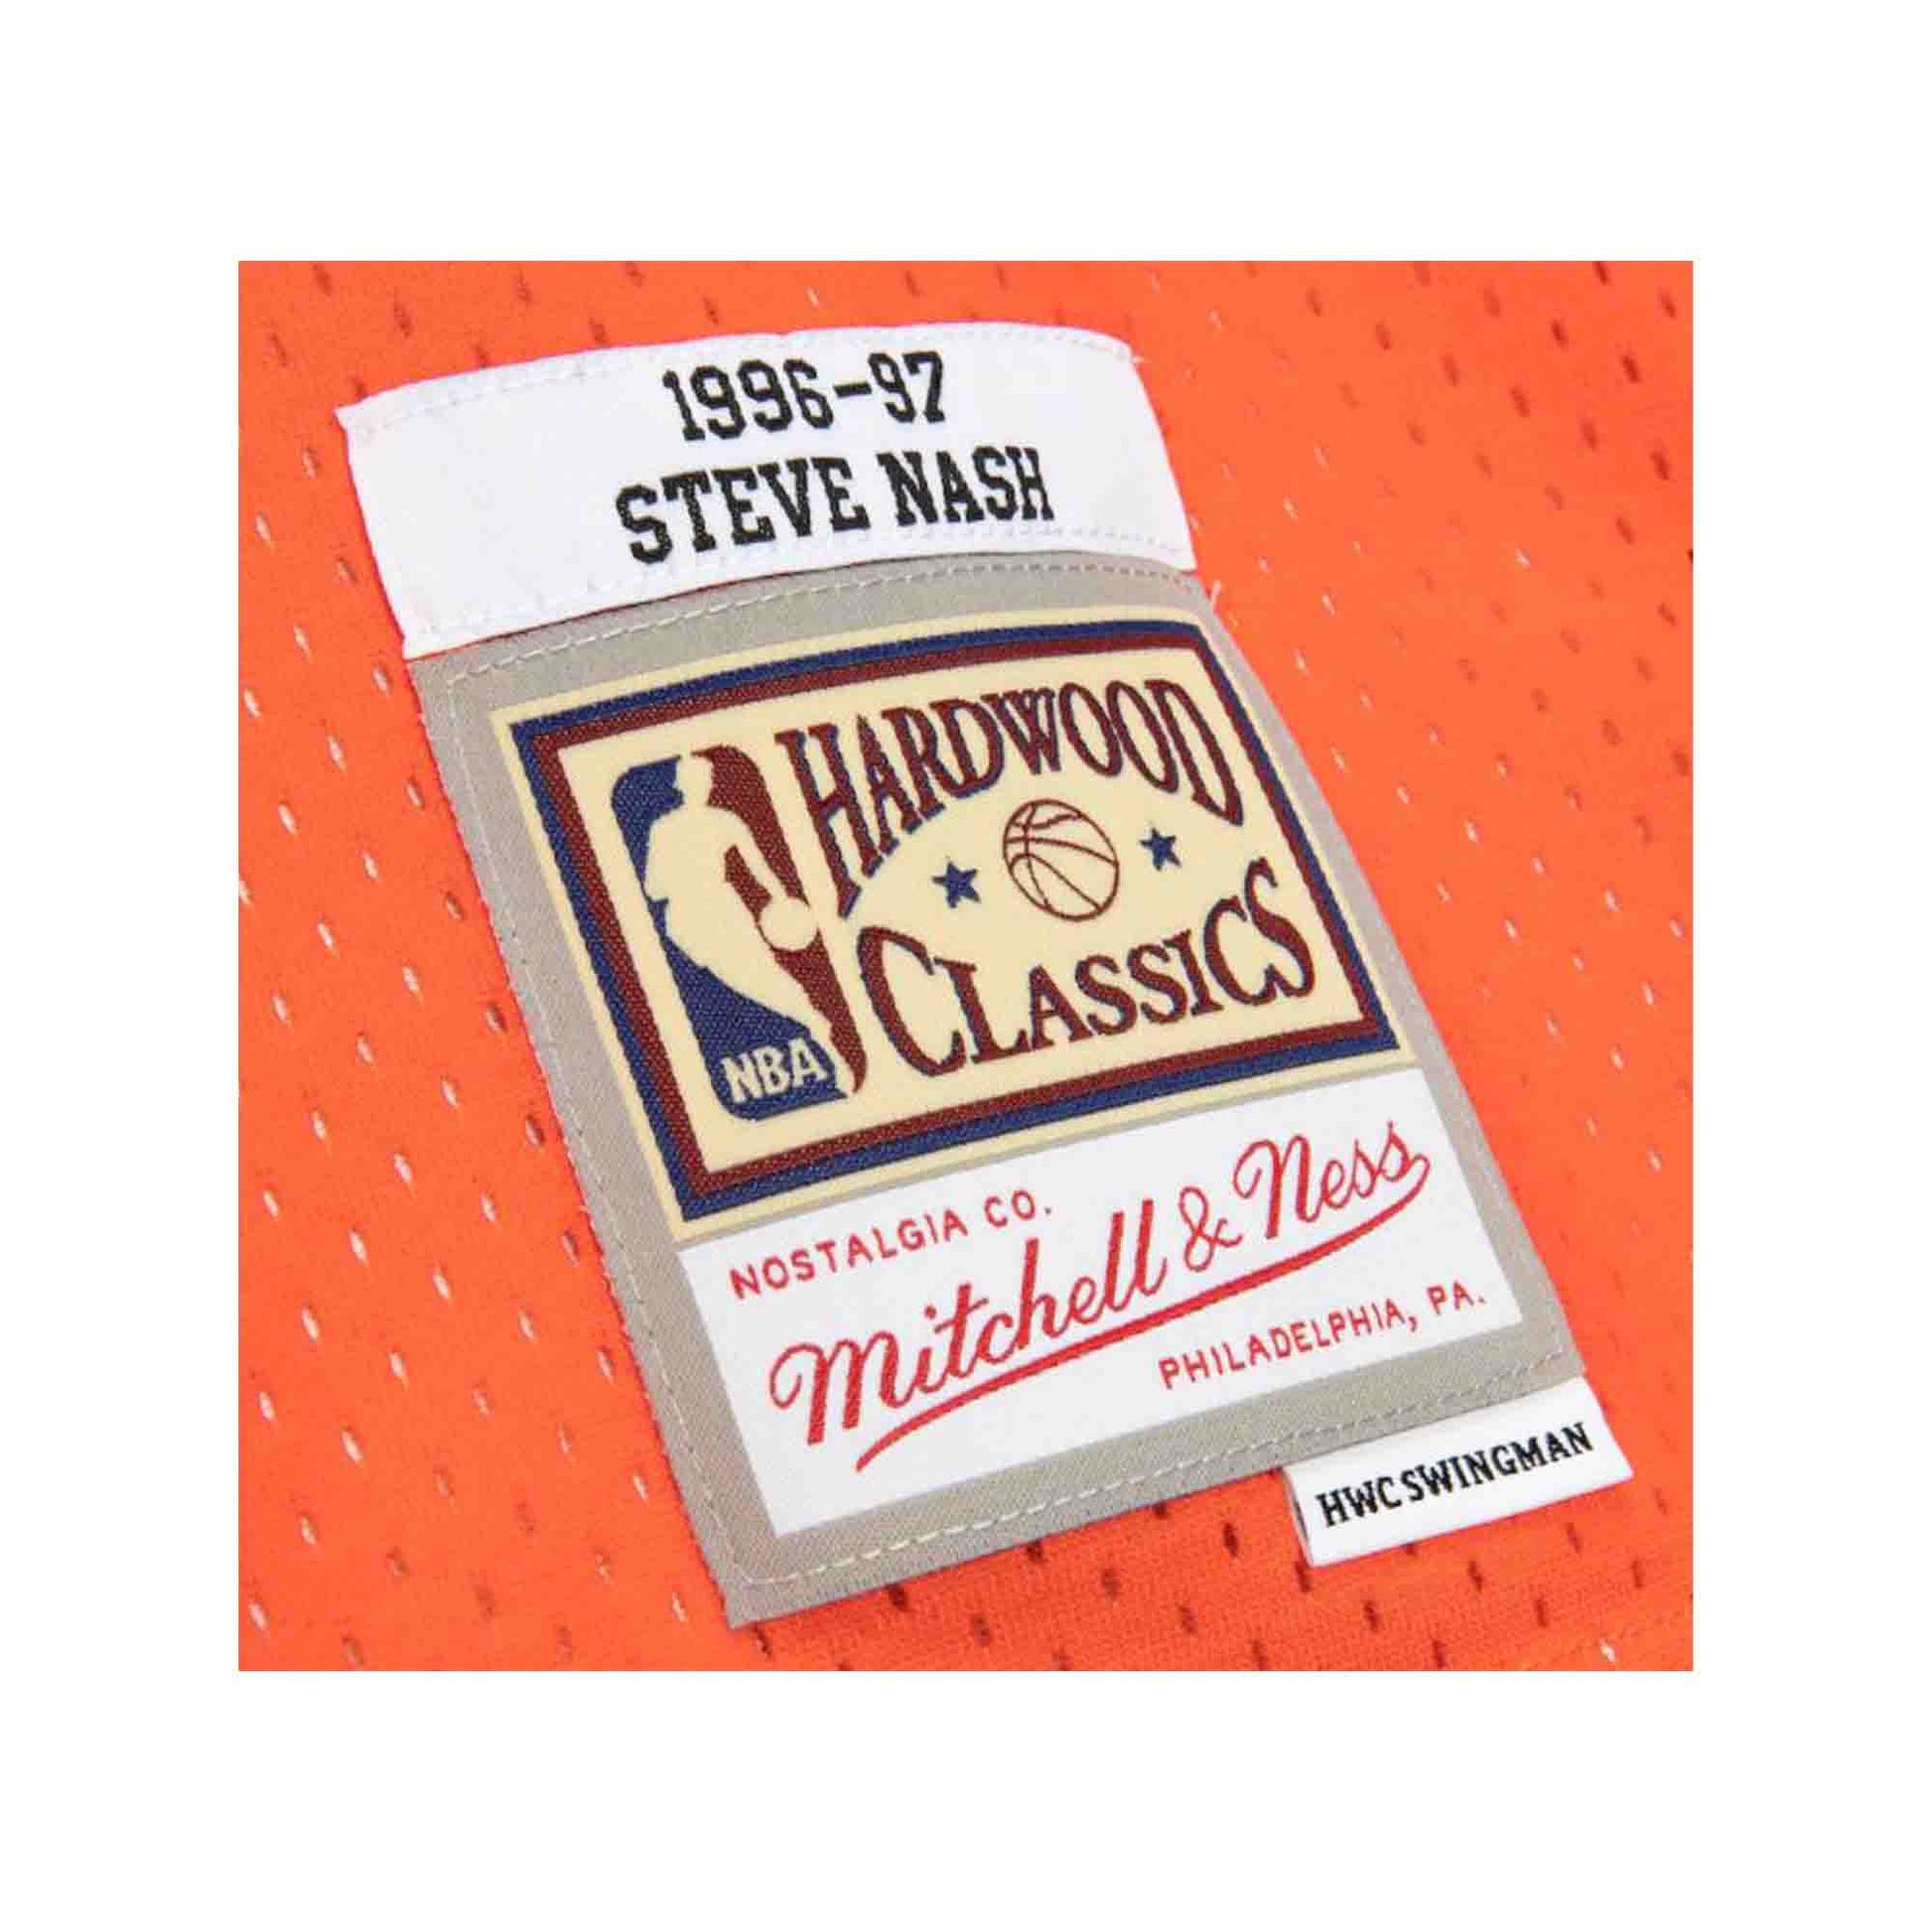 Phoenix Suns Steve Nash Mitchell & Ness 1996-97 Hardwood Classics Reload  Swingman Orange Jersey